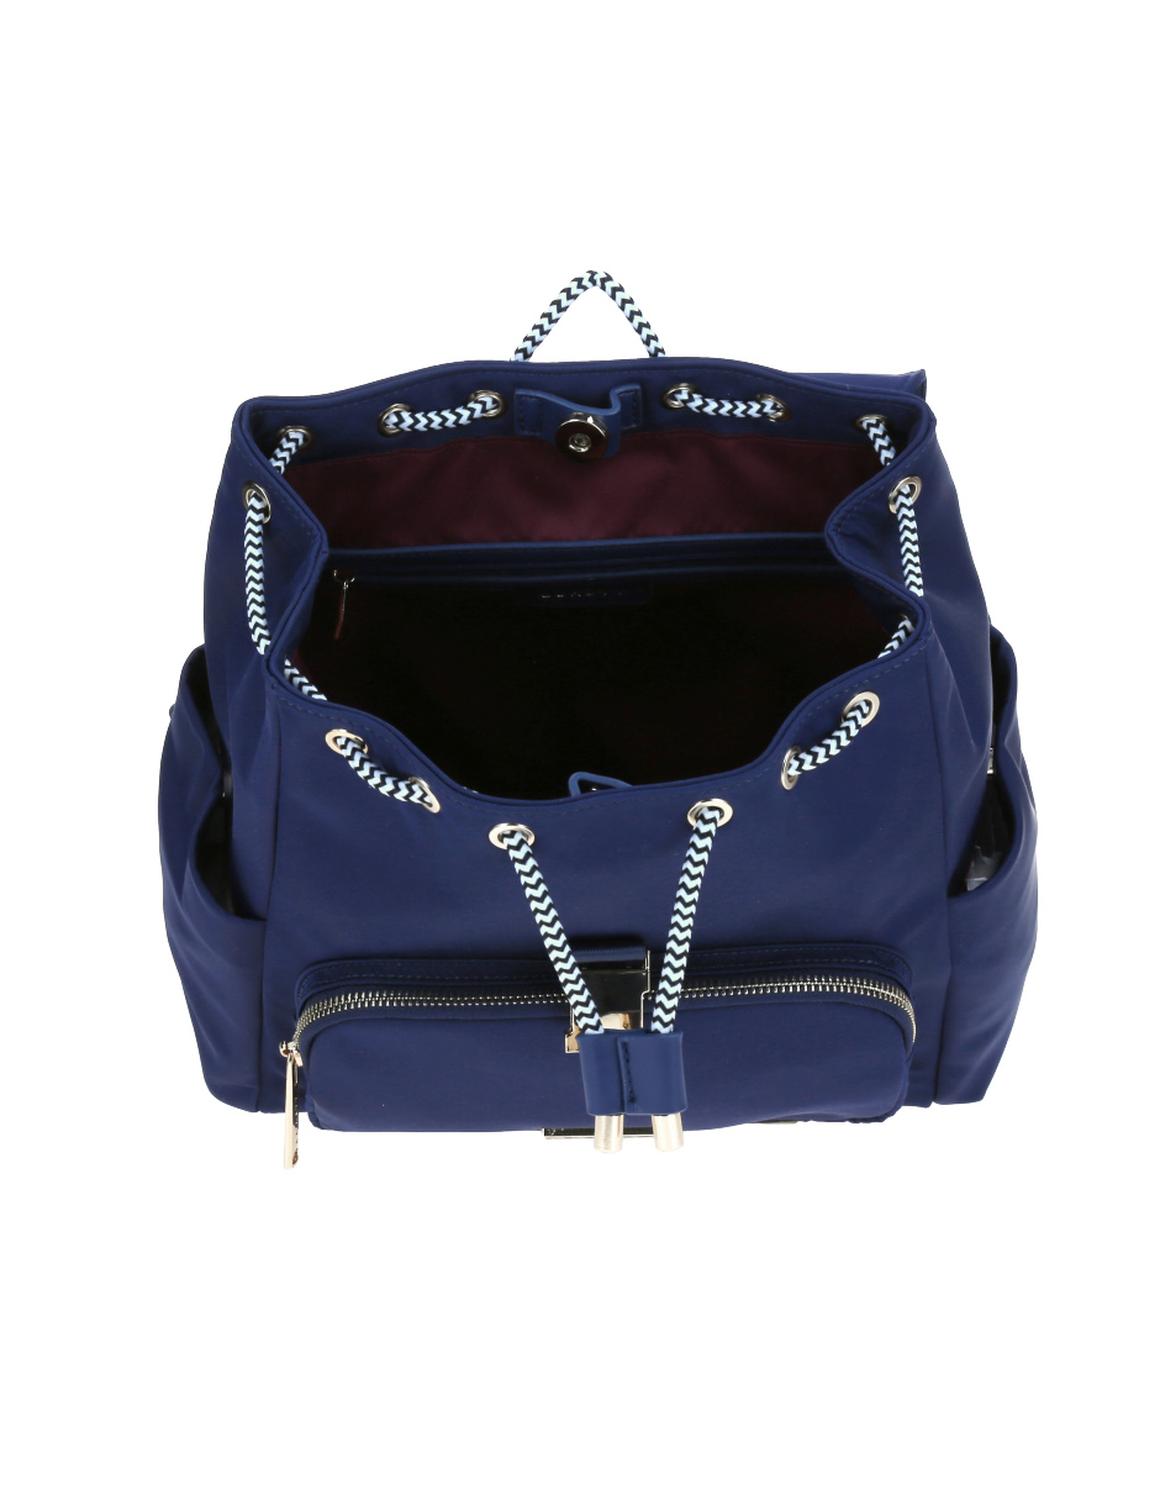 Backpack Azul Kokep By Gorett